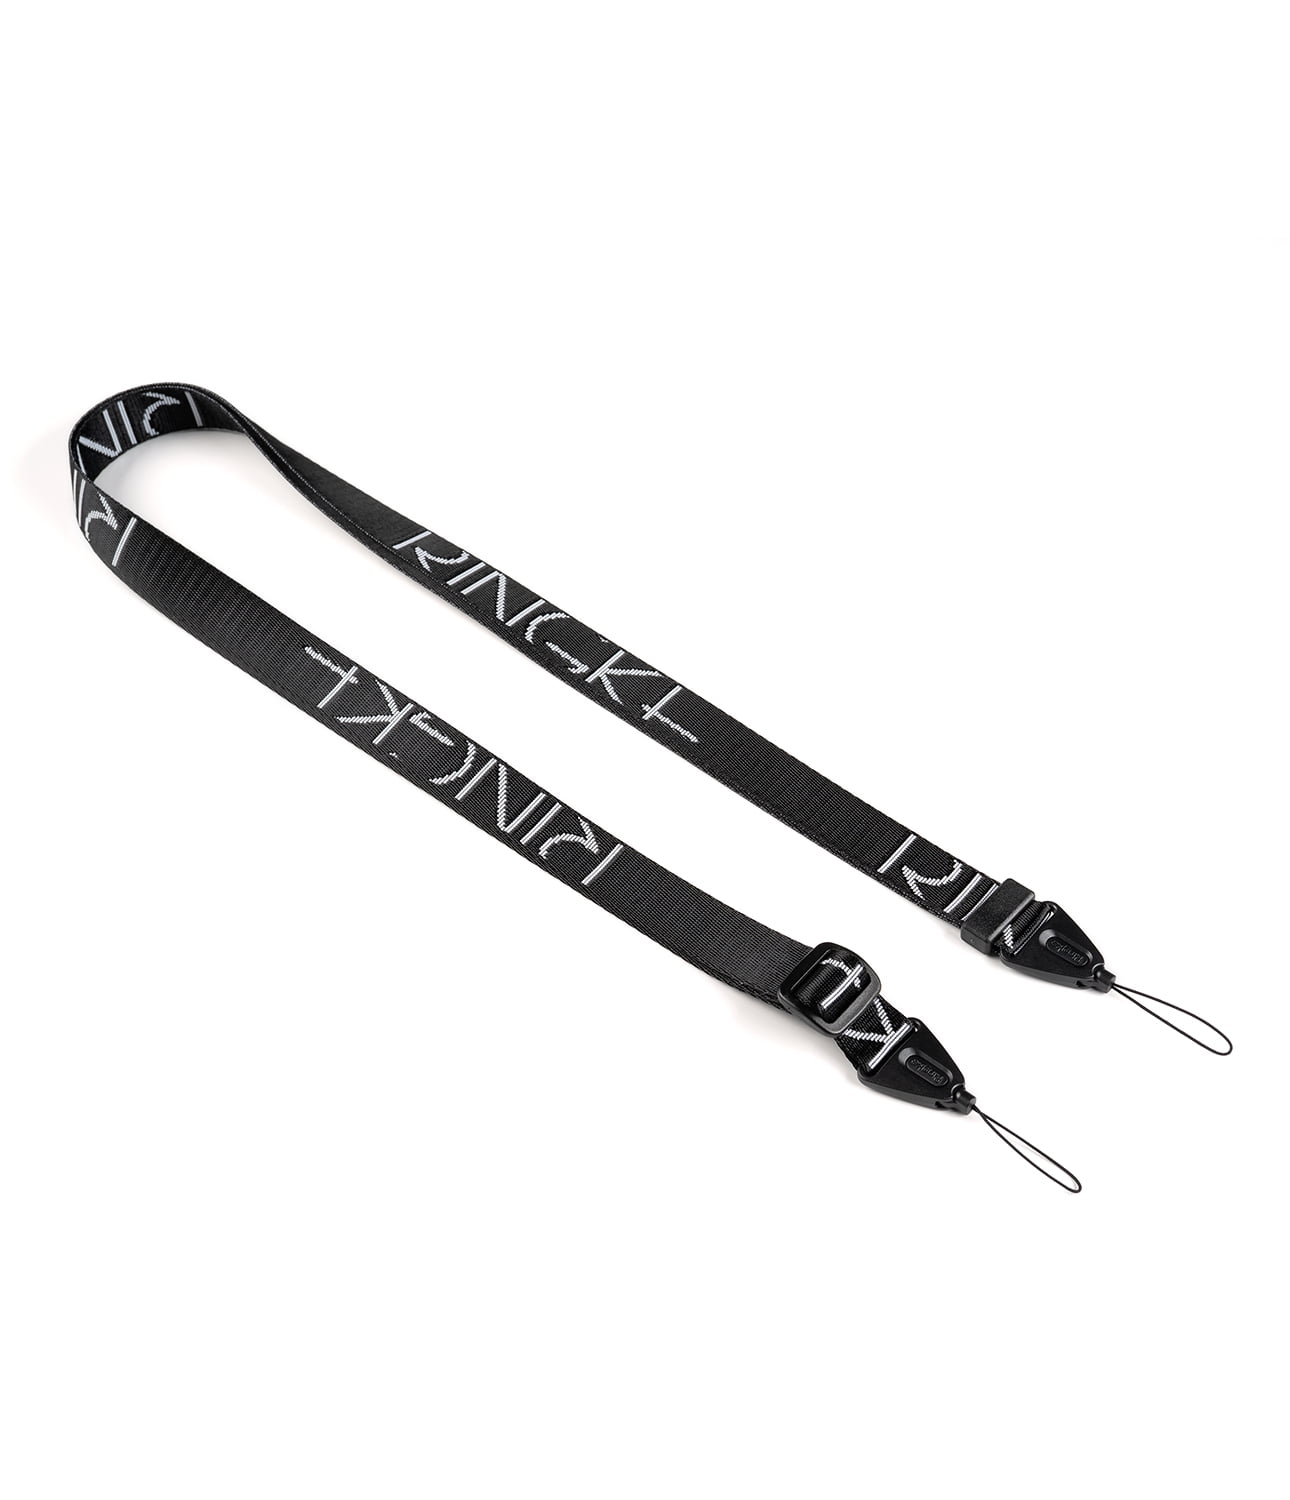 Ringke [Shoulder Strap] for Cell Phone Cases, Keys, Cameras & ID QuikCatch Lanyard Adjustable Crossbody String - Lettering Black